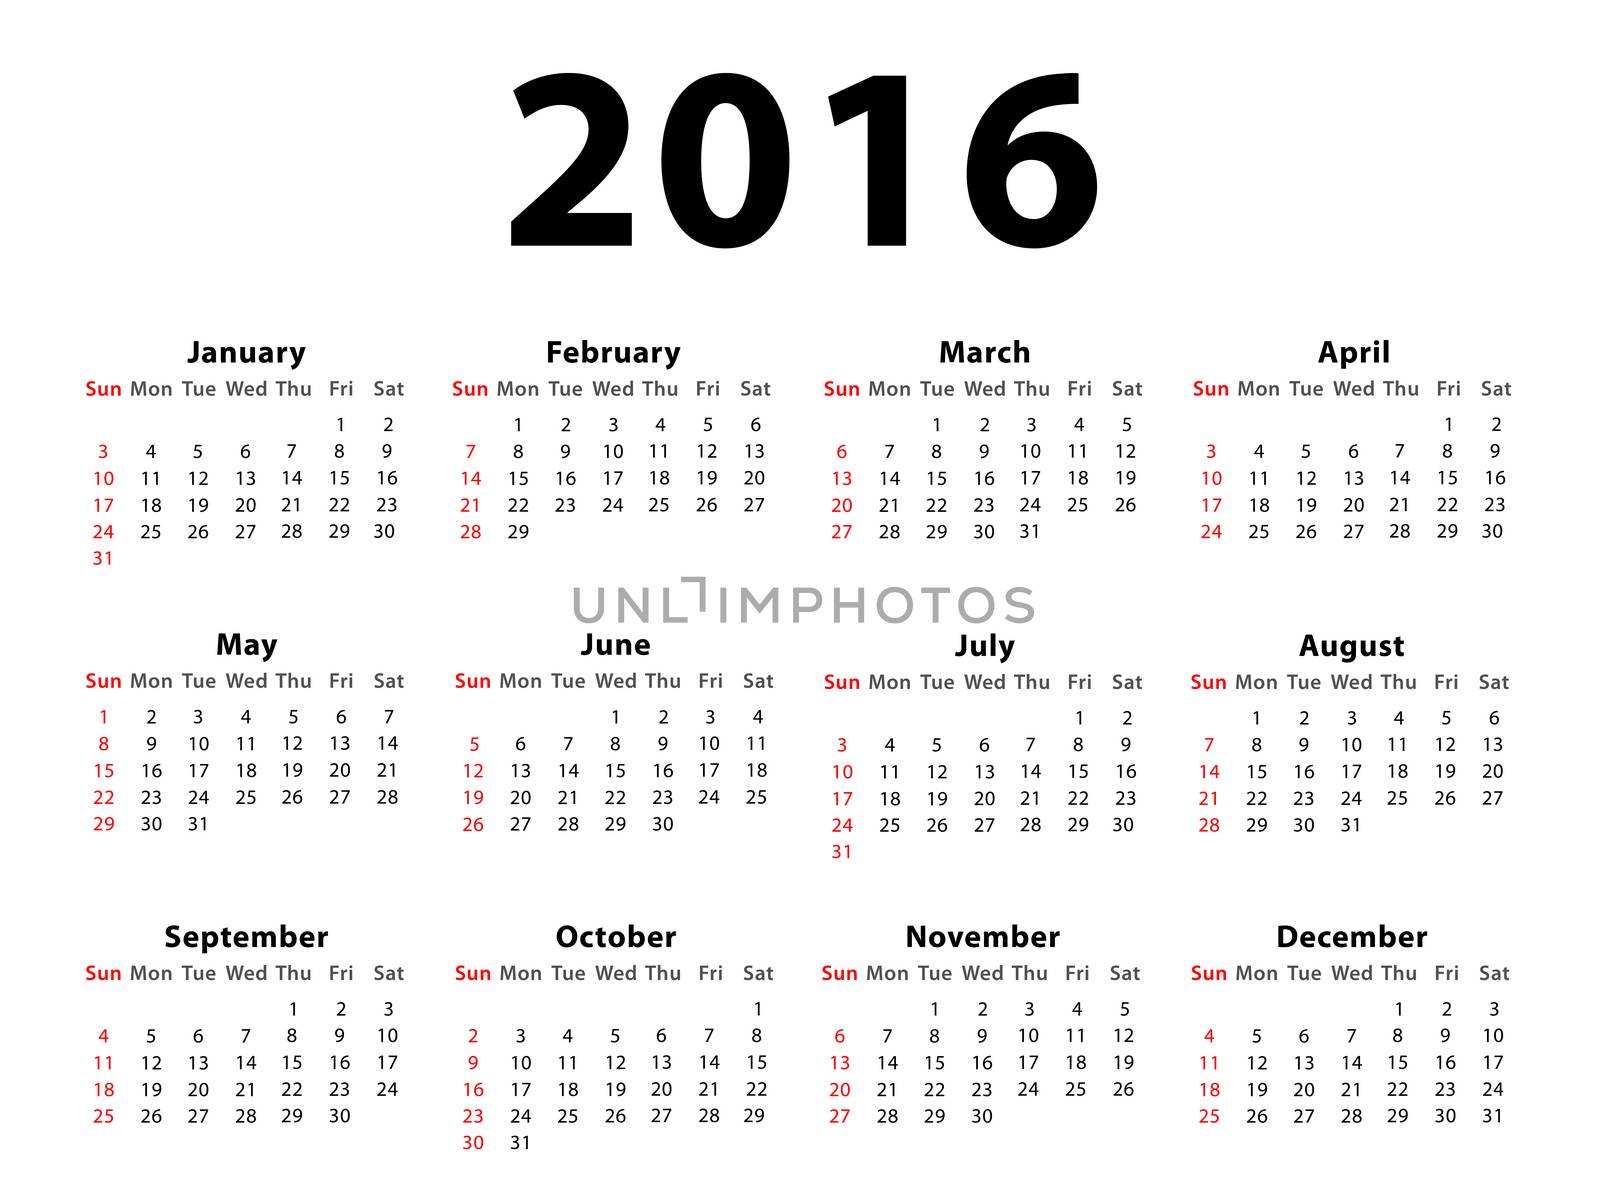 Calendar 2016 Landscape by dynamicfoto